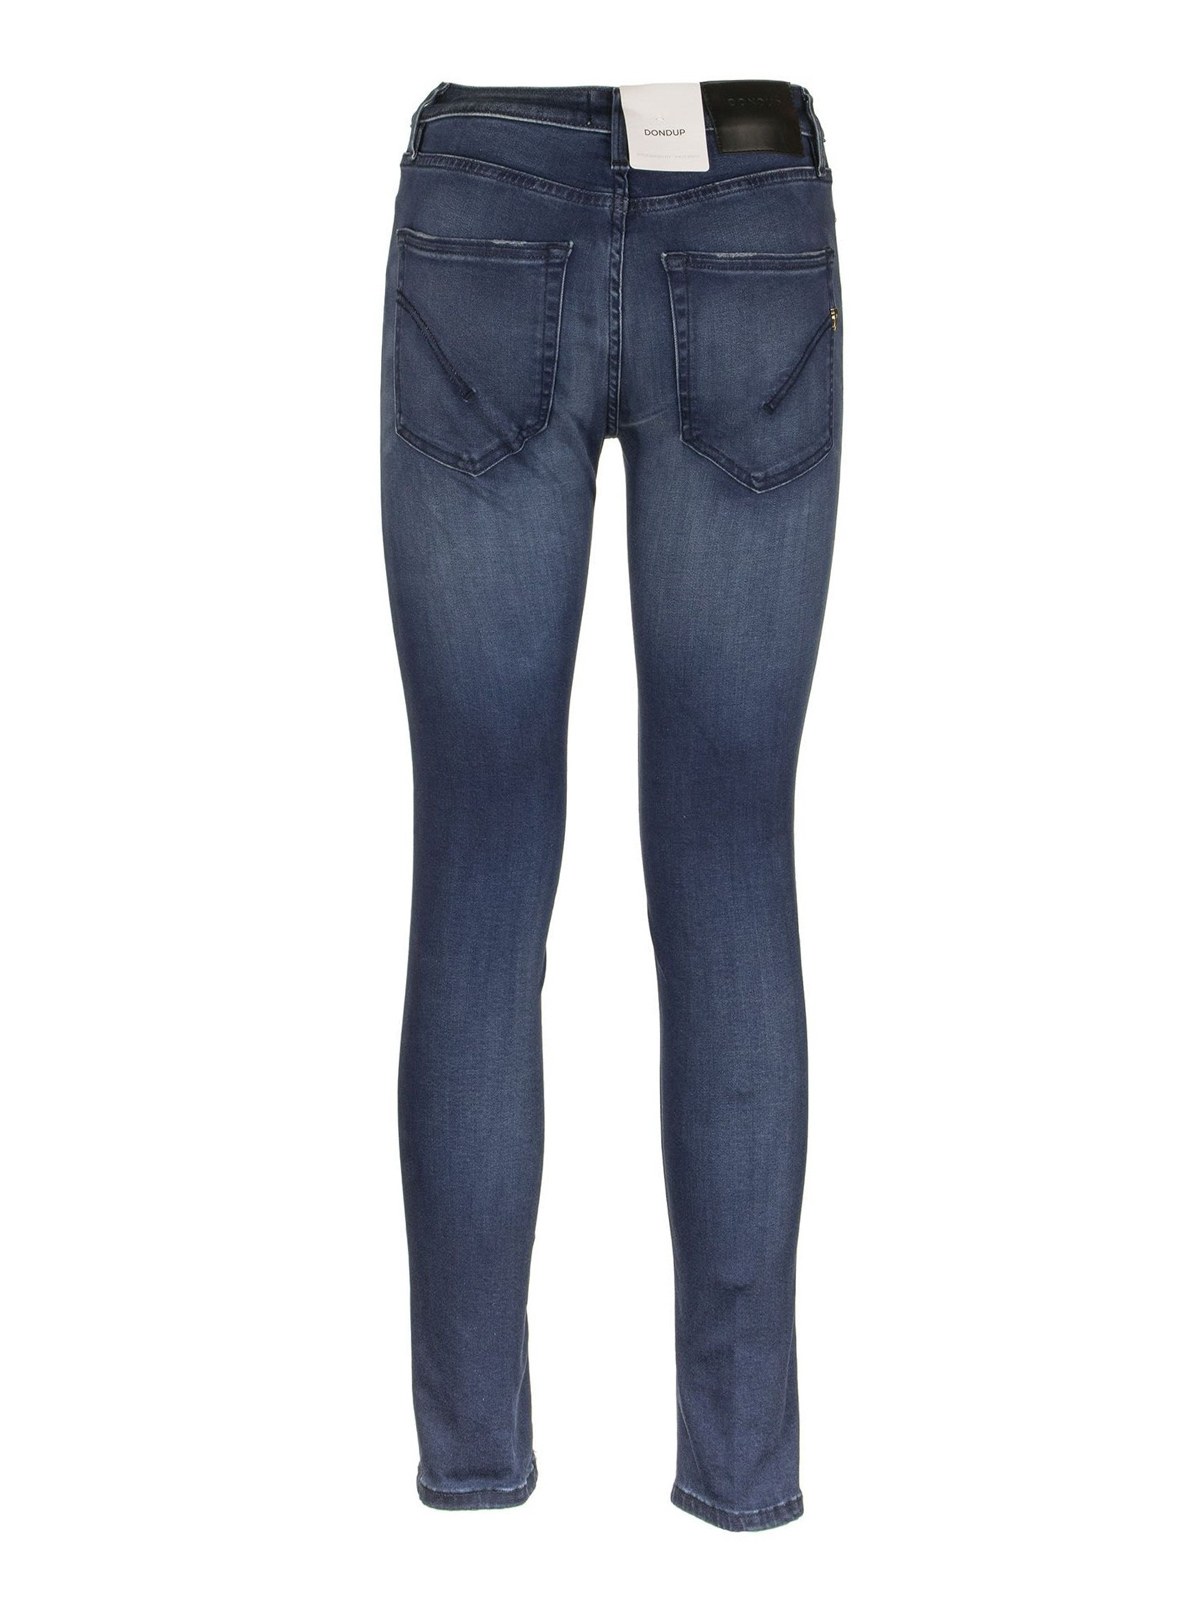 Skinny jeans Dondup - Iris super skinny jeans - DP450DS0264DAD5800